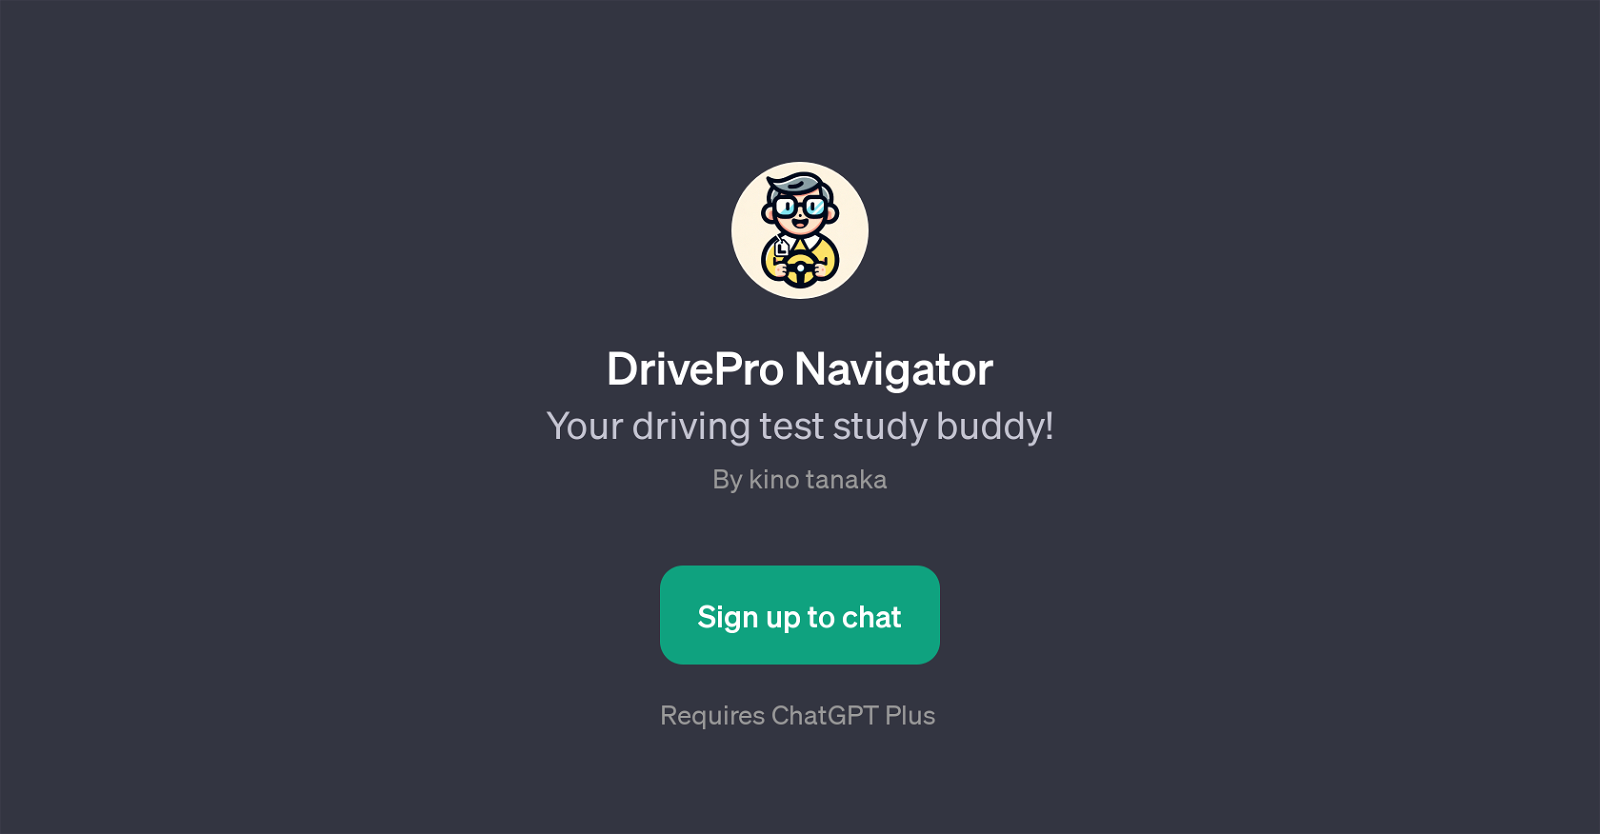 DrivePro Navigator website